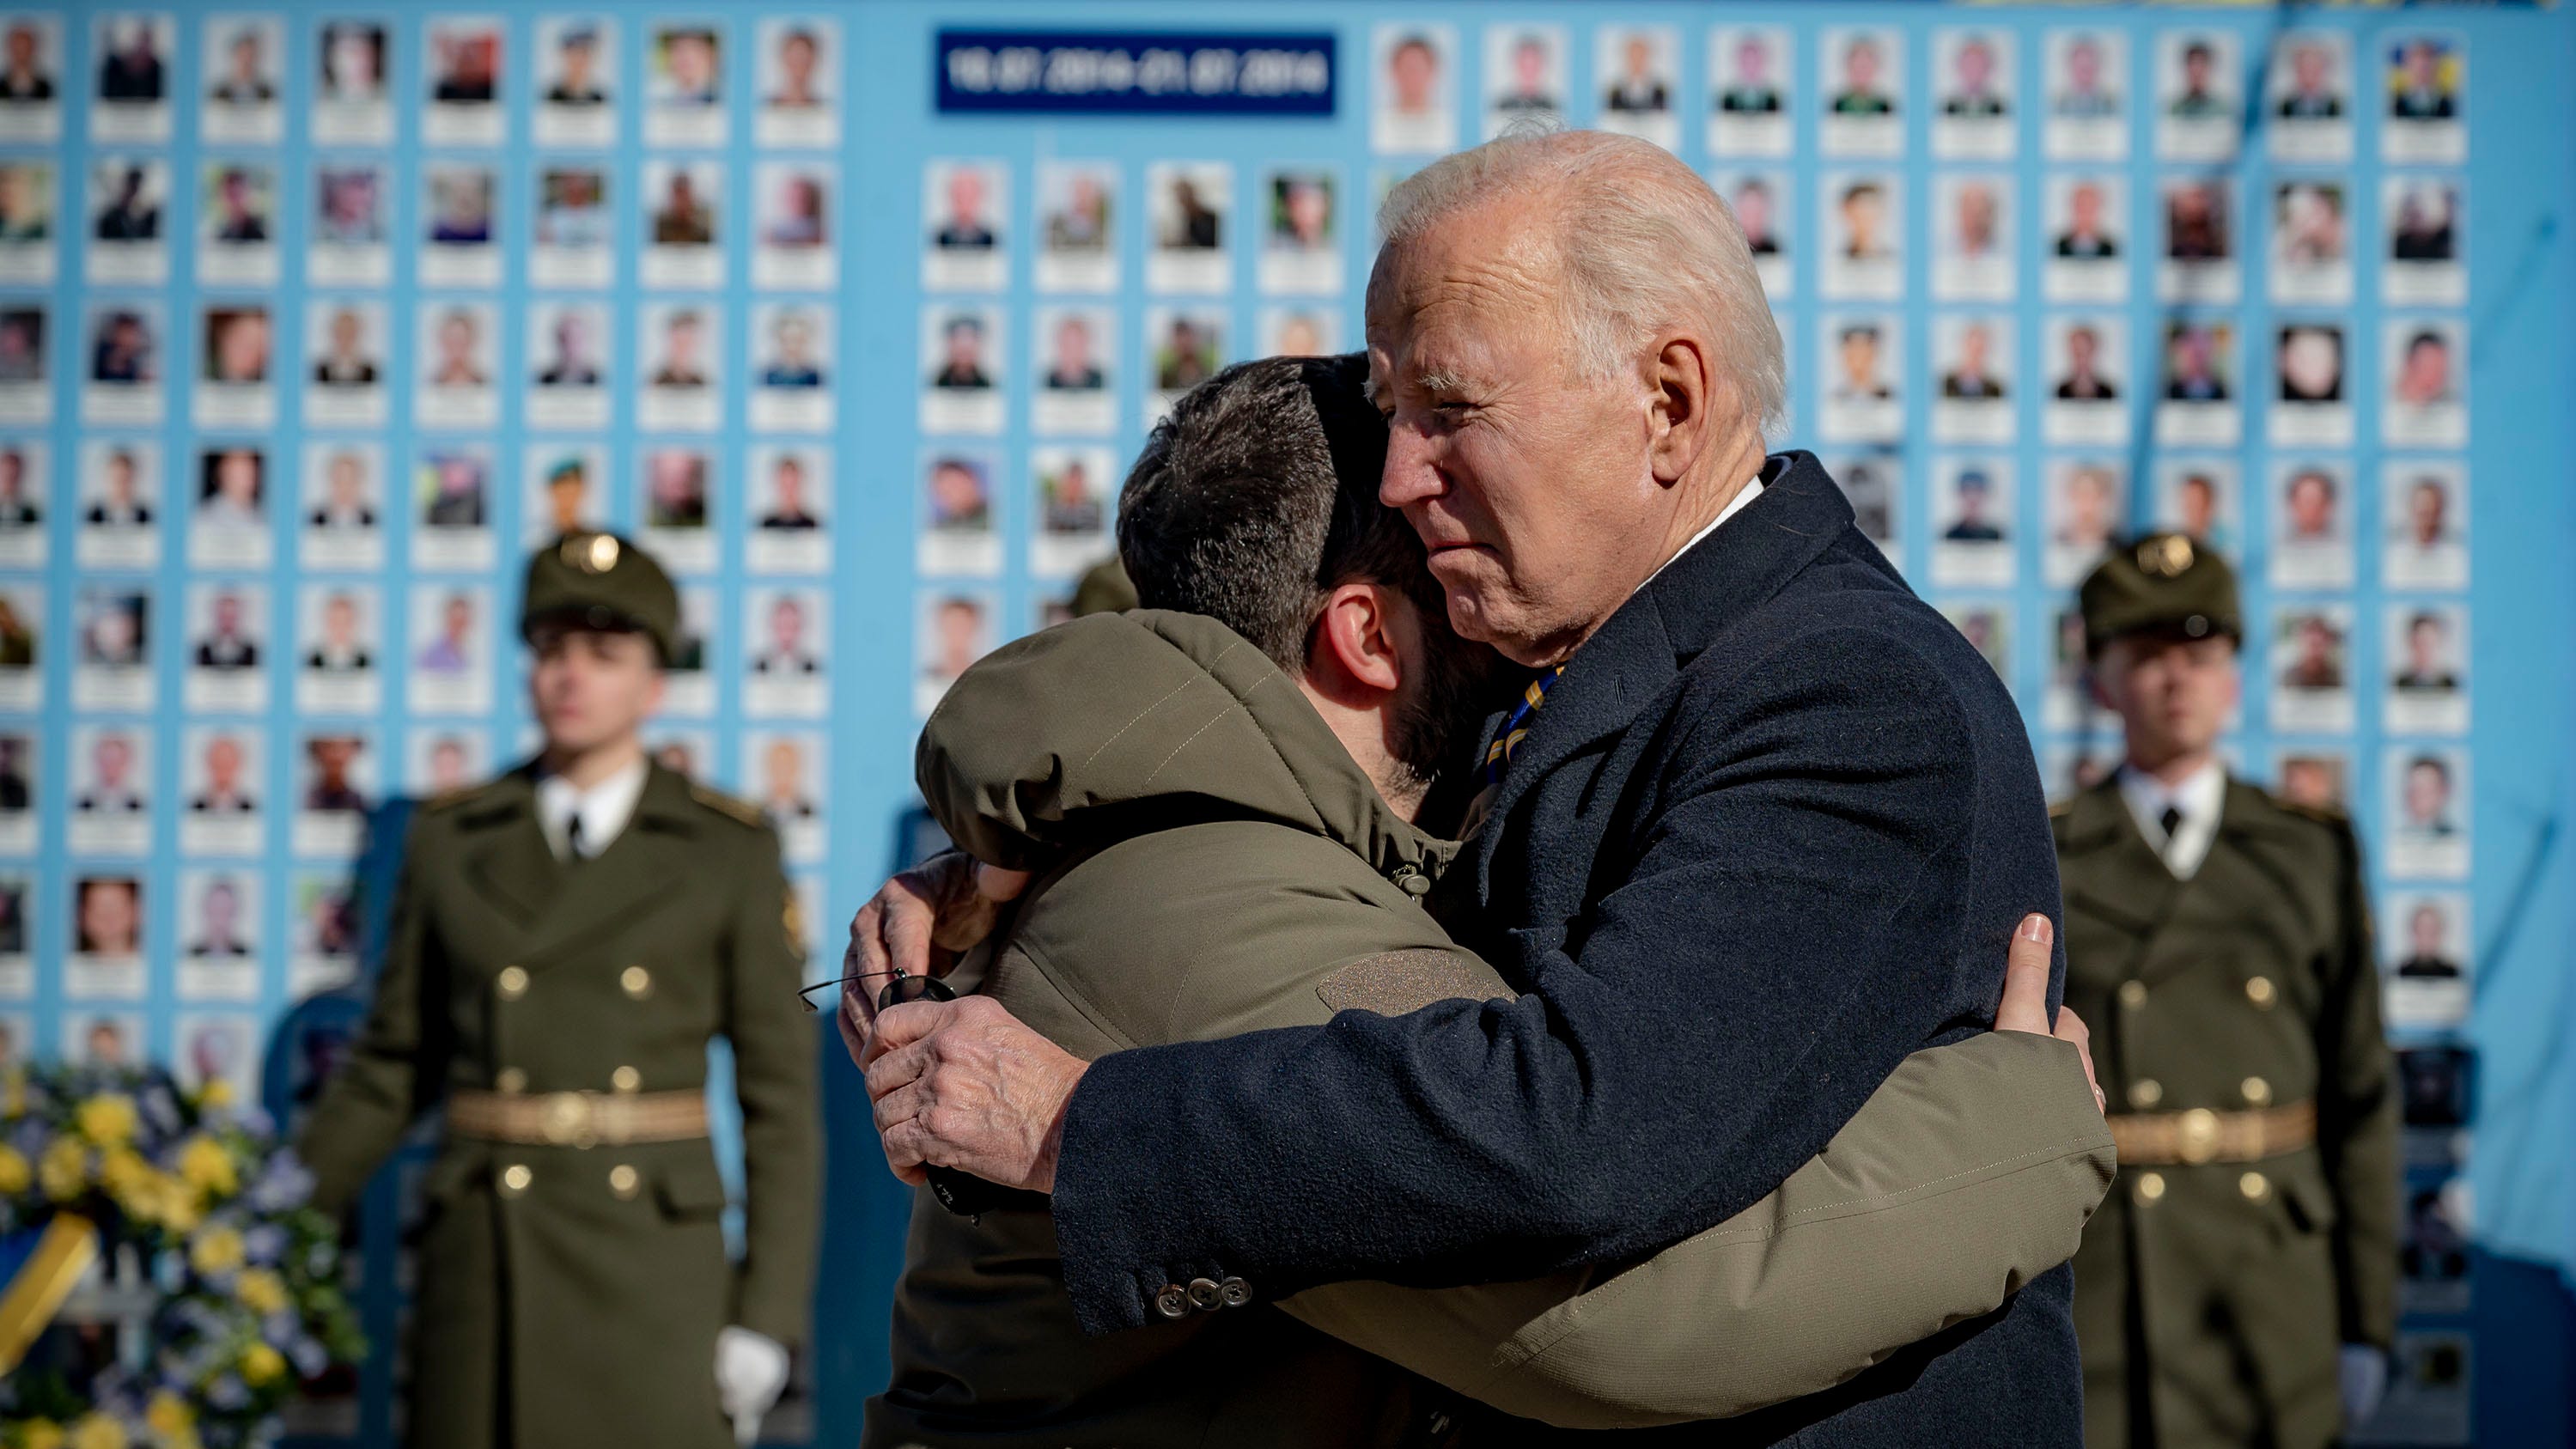 President Joe Biden and Ukrainian President Volodymyr Zelenskyy hug goodbye at the memorial wall of fallen soldiers in Kyiv on Feb. 20, 2023.